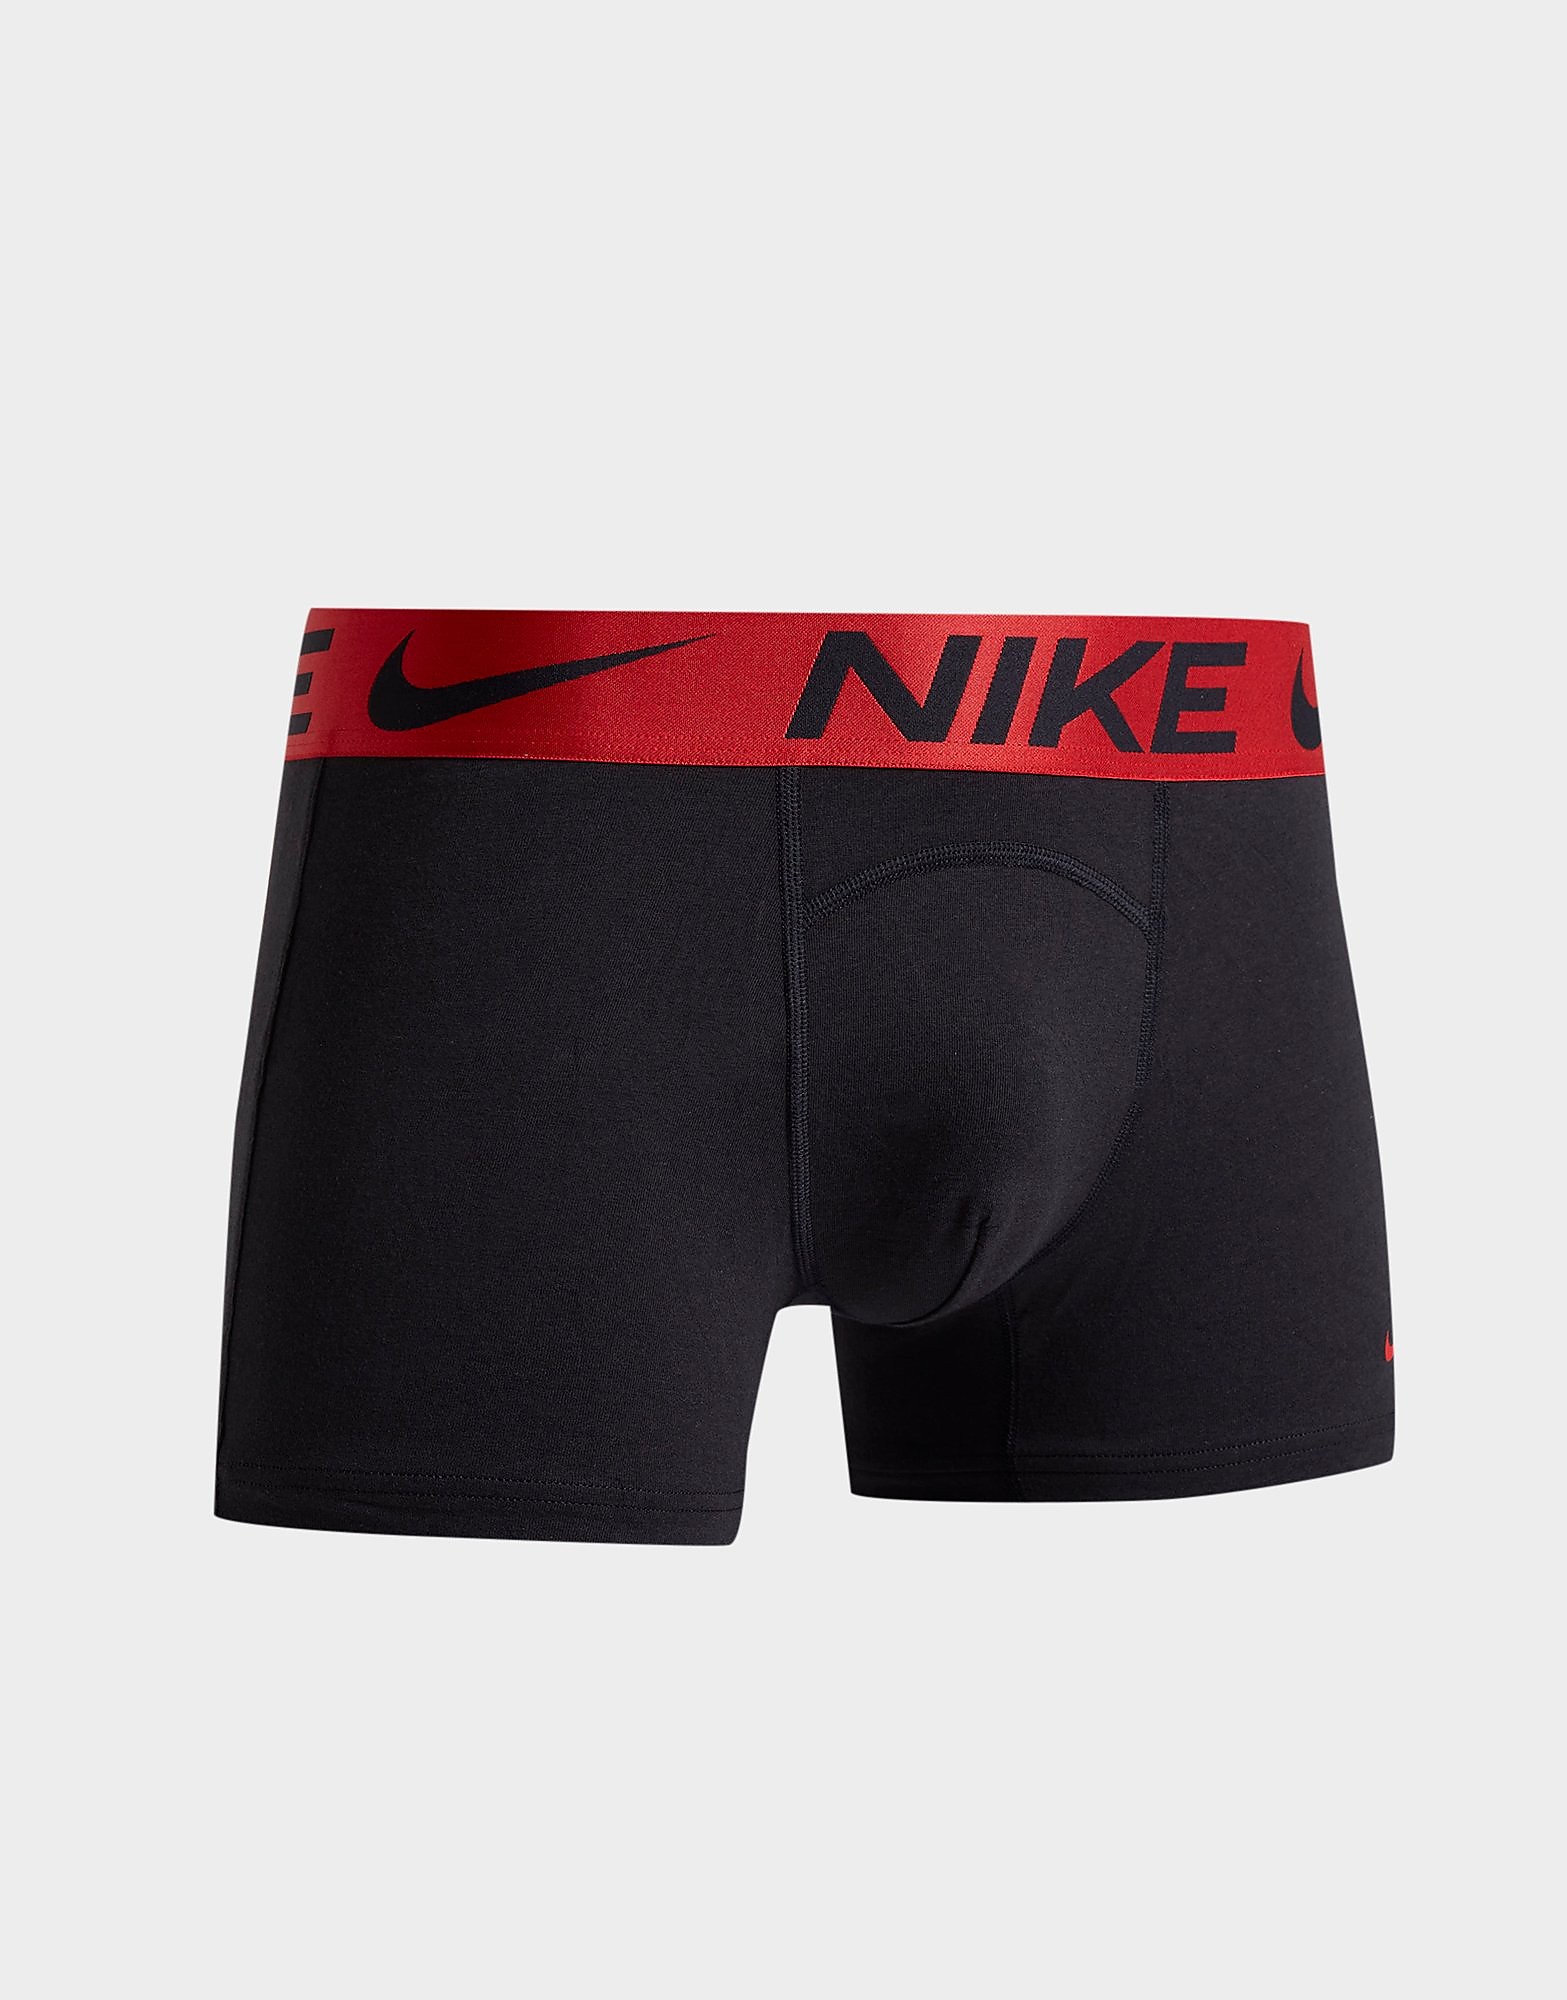 Nike elite-bokserit miehet - mens, musta, nike